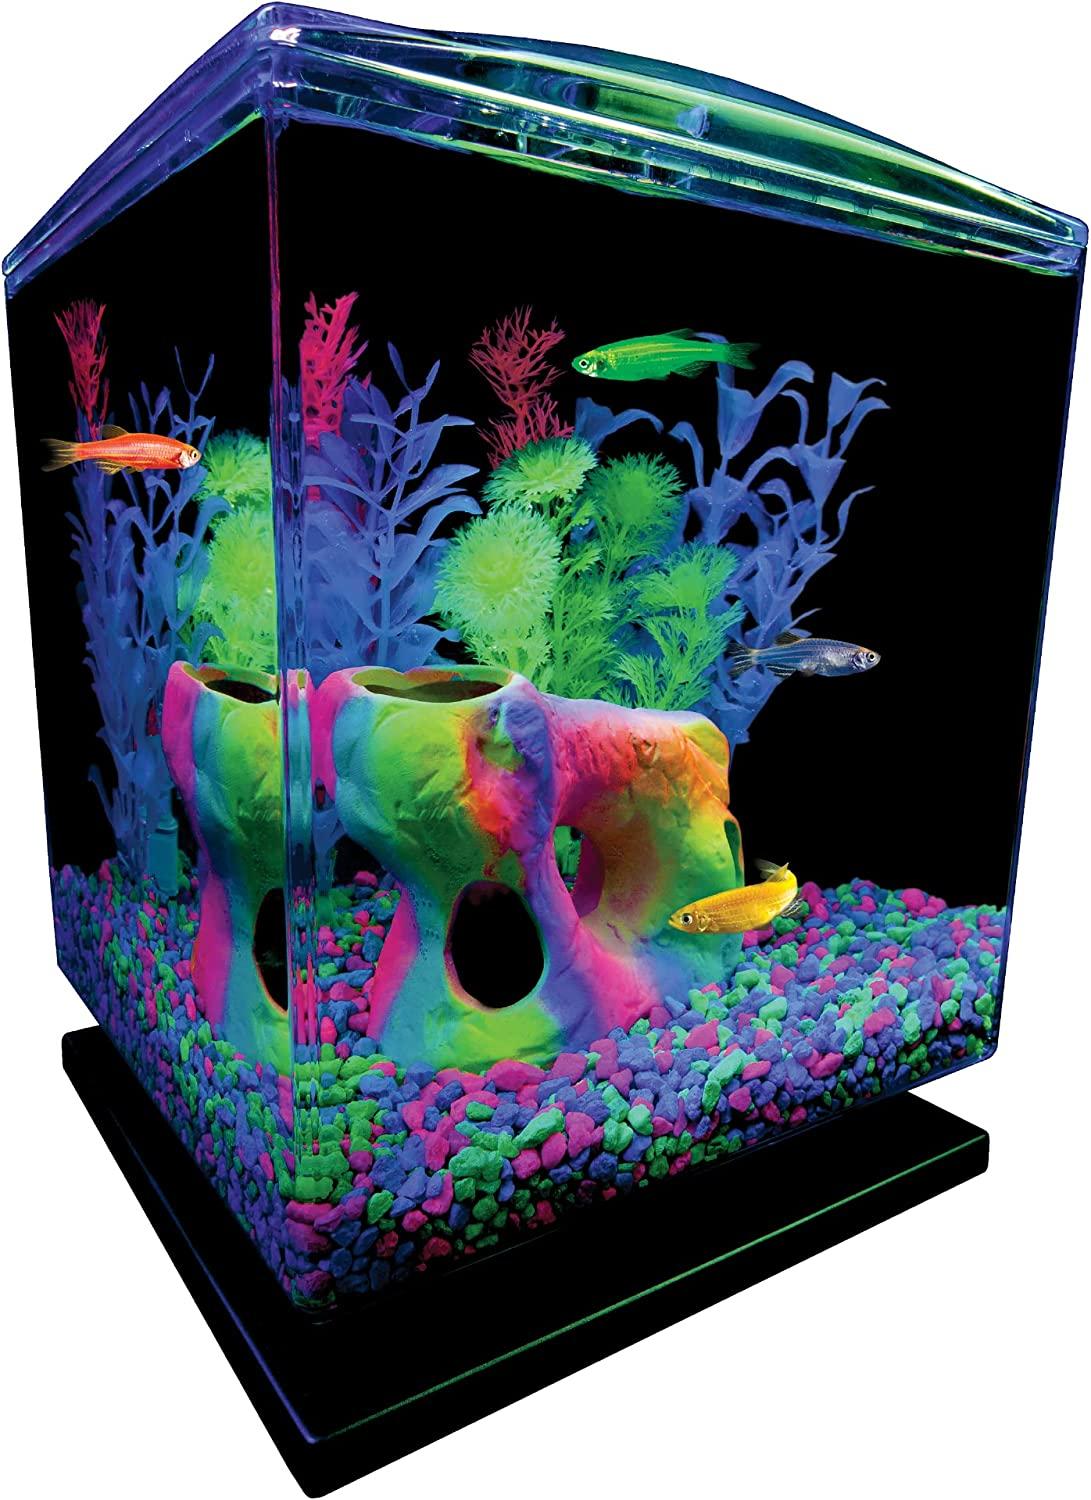 GloFish Aquarium Gravel, Fluorescent Colors, Complements GloFish Tanks,  5-Pound Bag Pink/Green/Blue Fluorescent